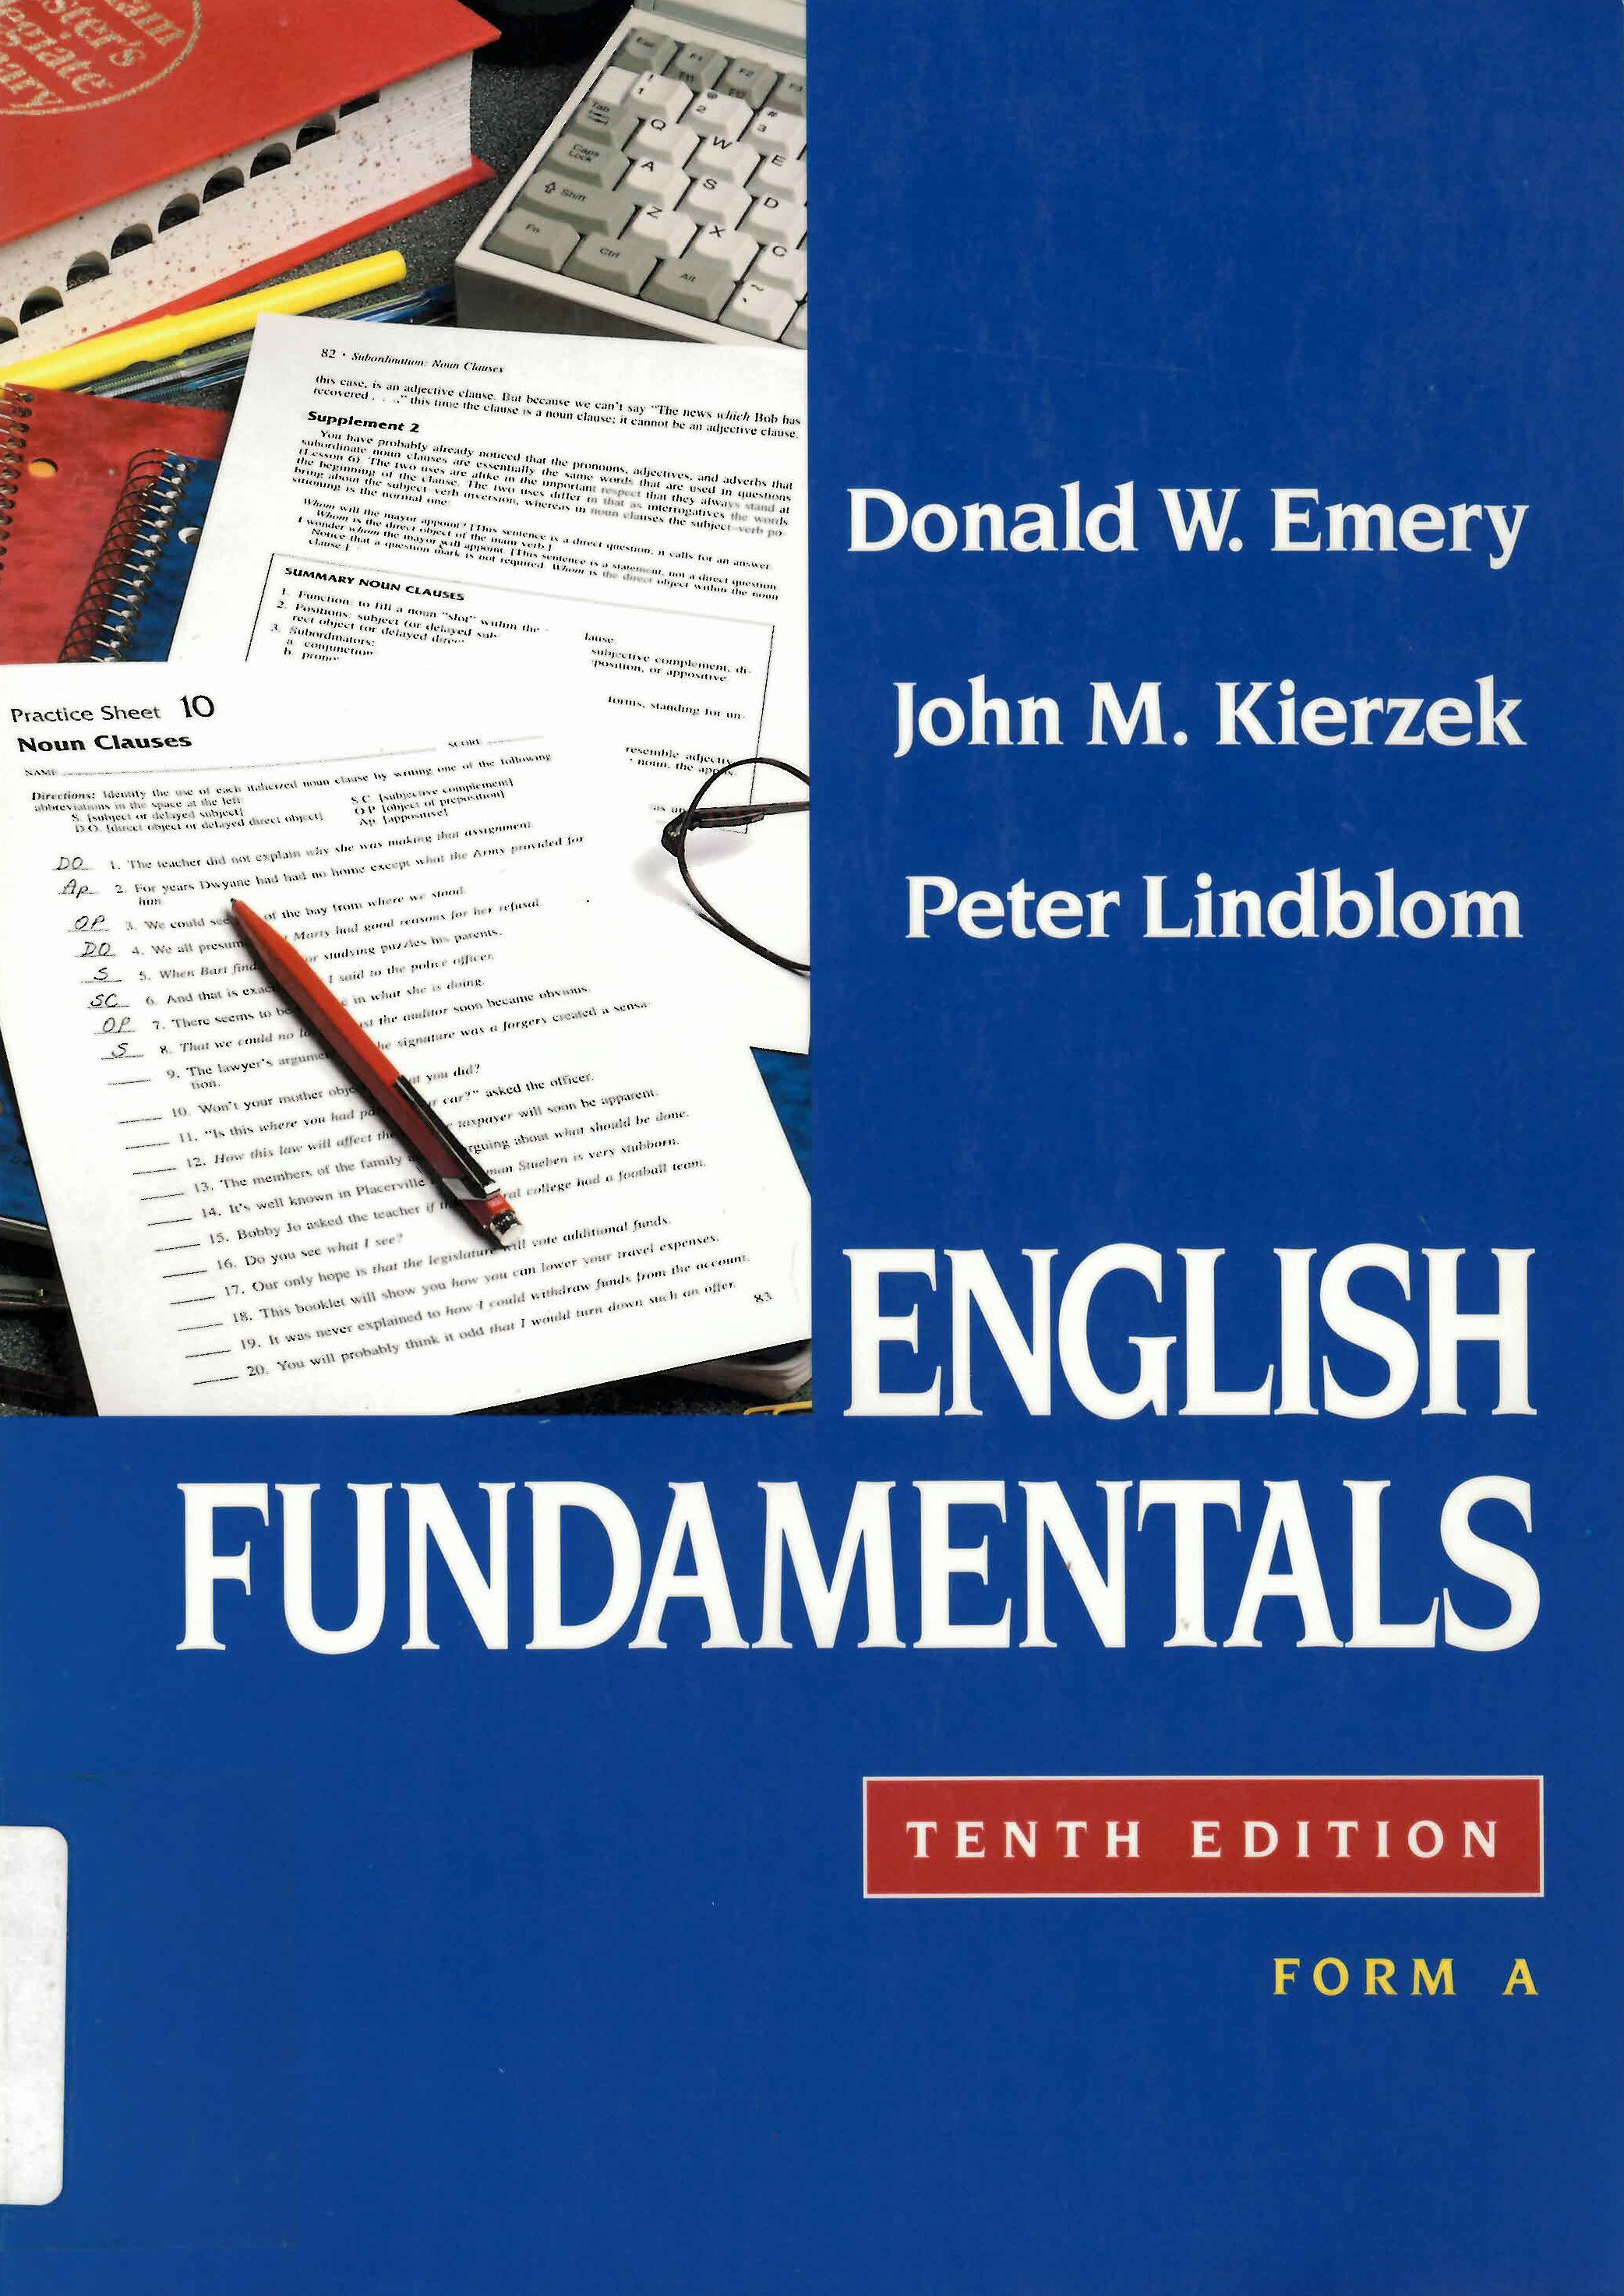 English fundamentals, form A